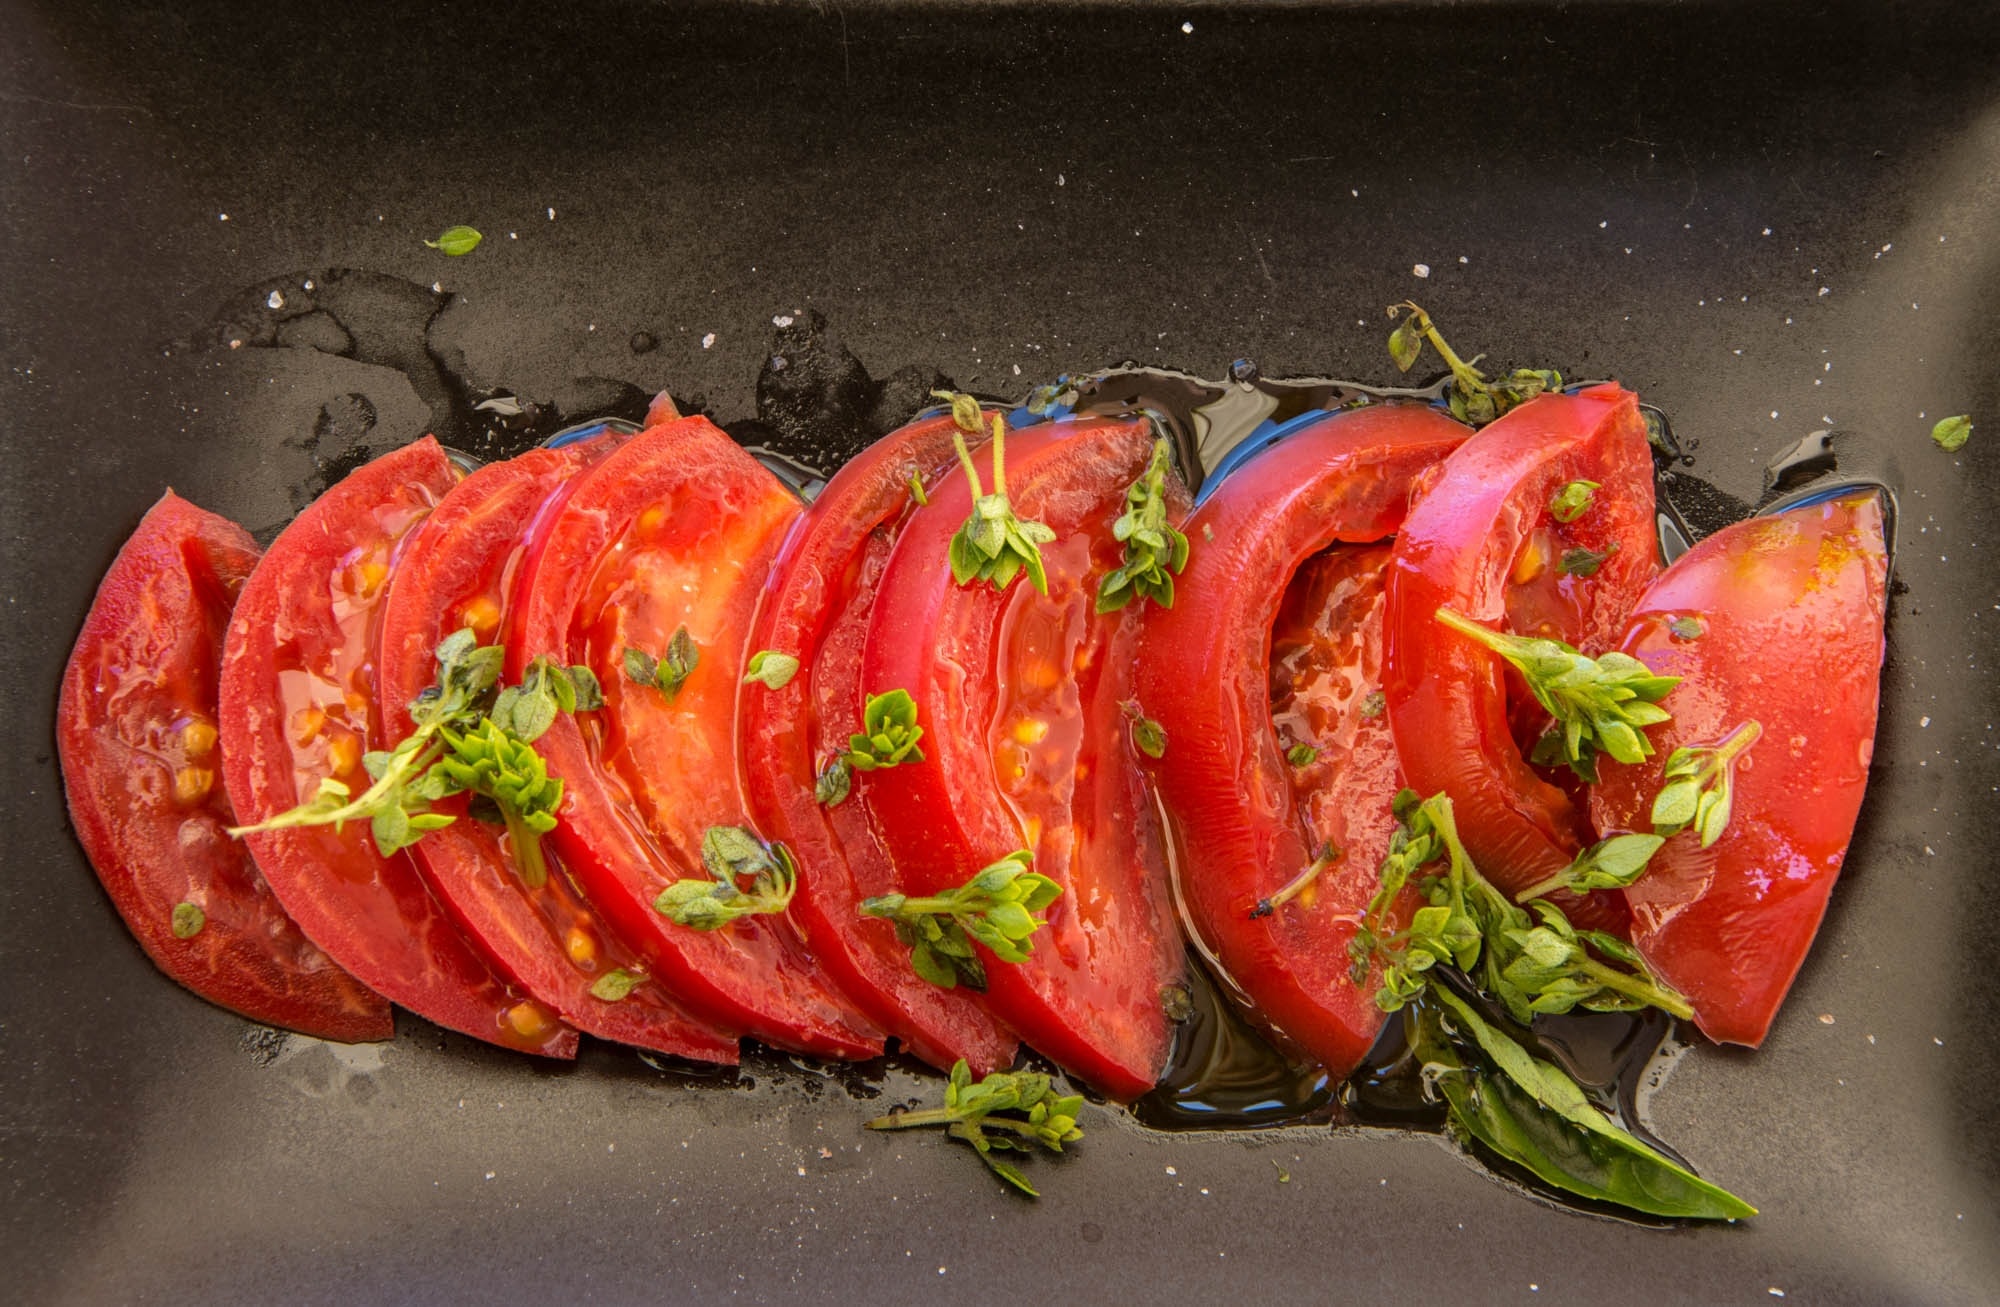 sliced tomato